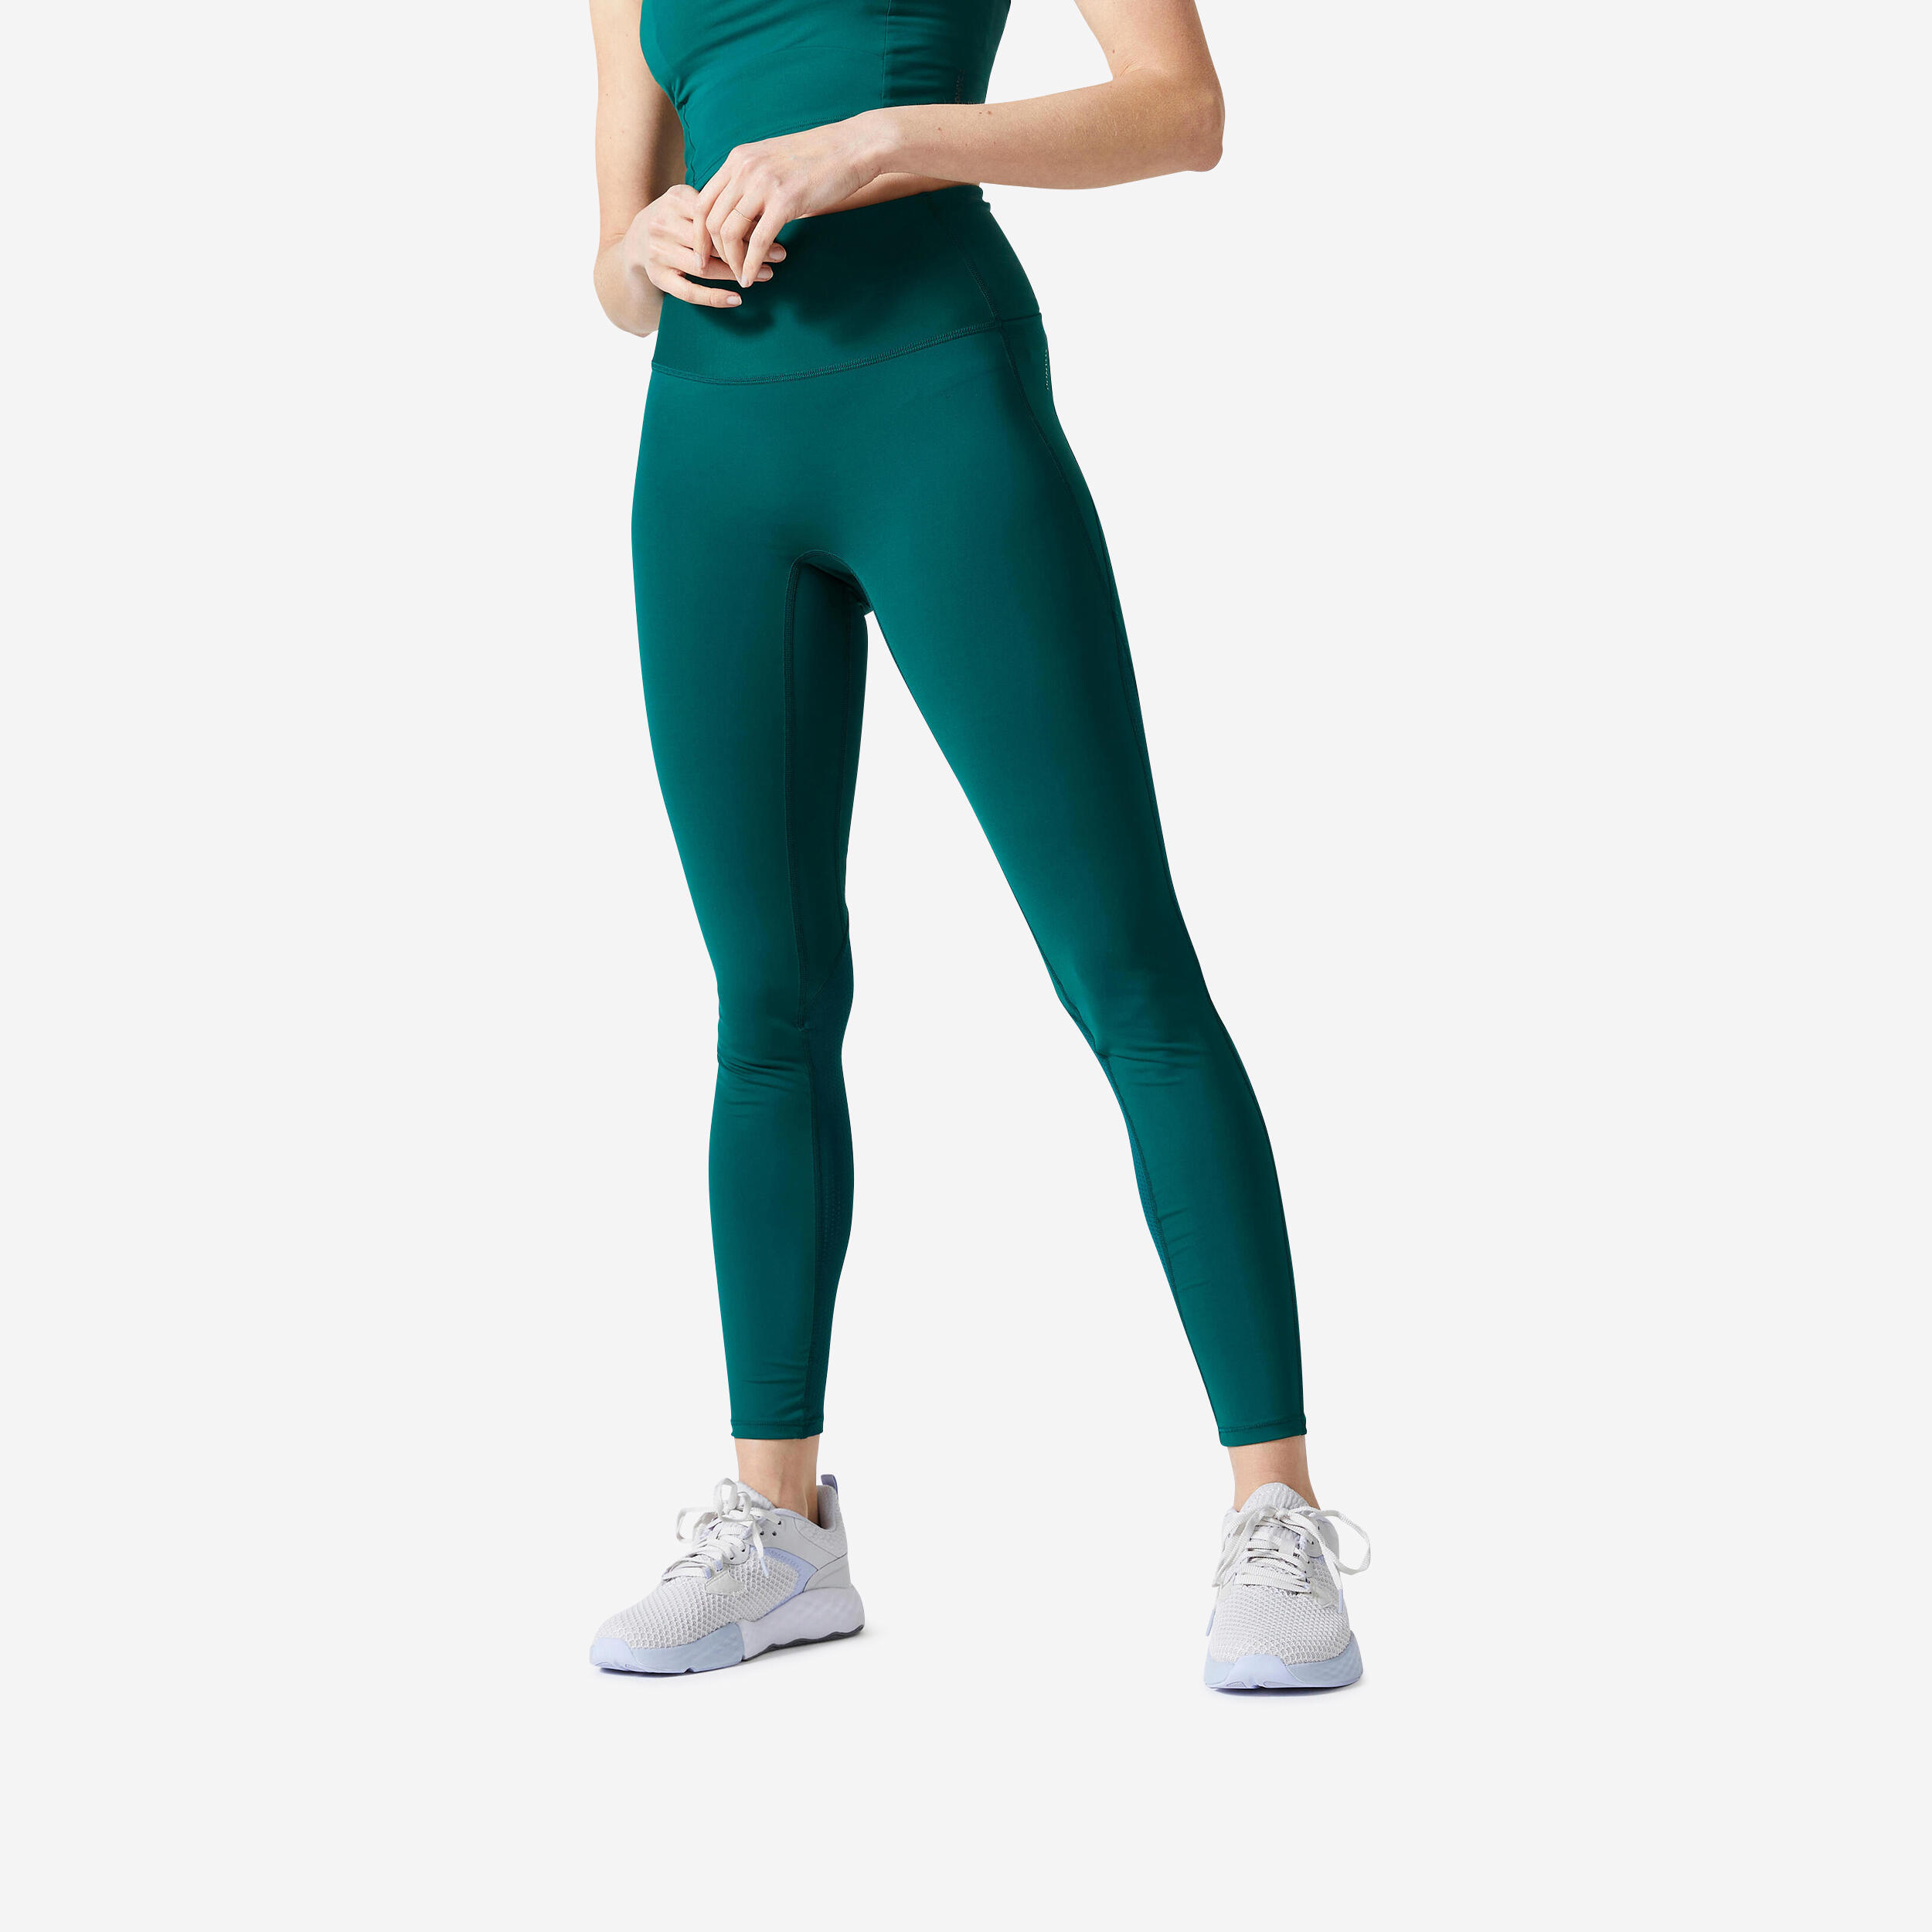 Women's High-Waisted Leggings - FTI 500 - Cypress green - Domyos